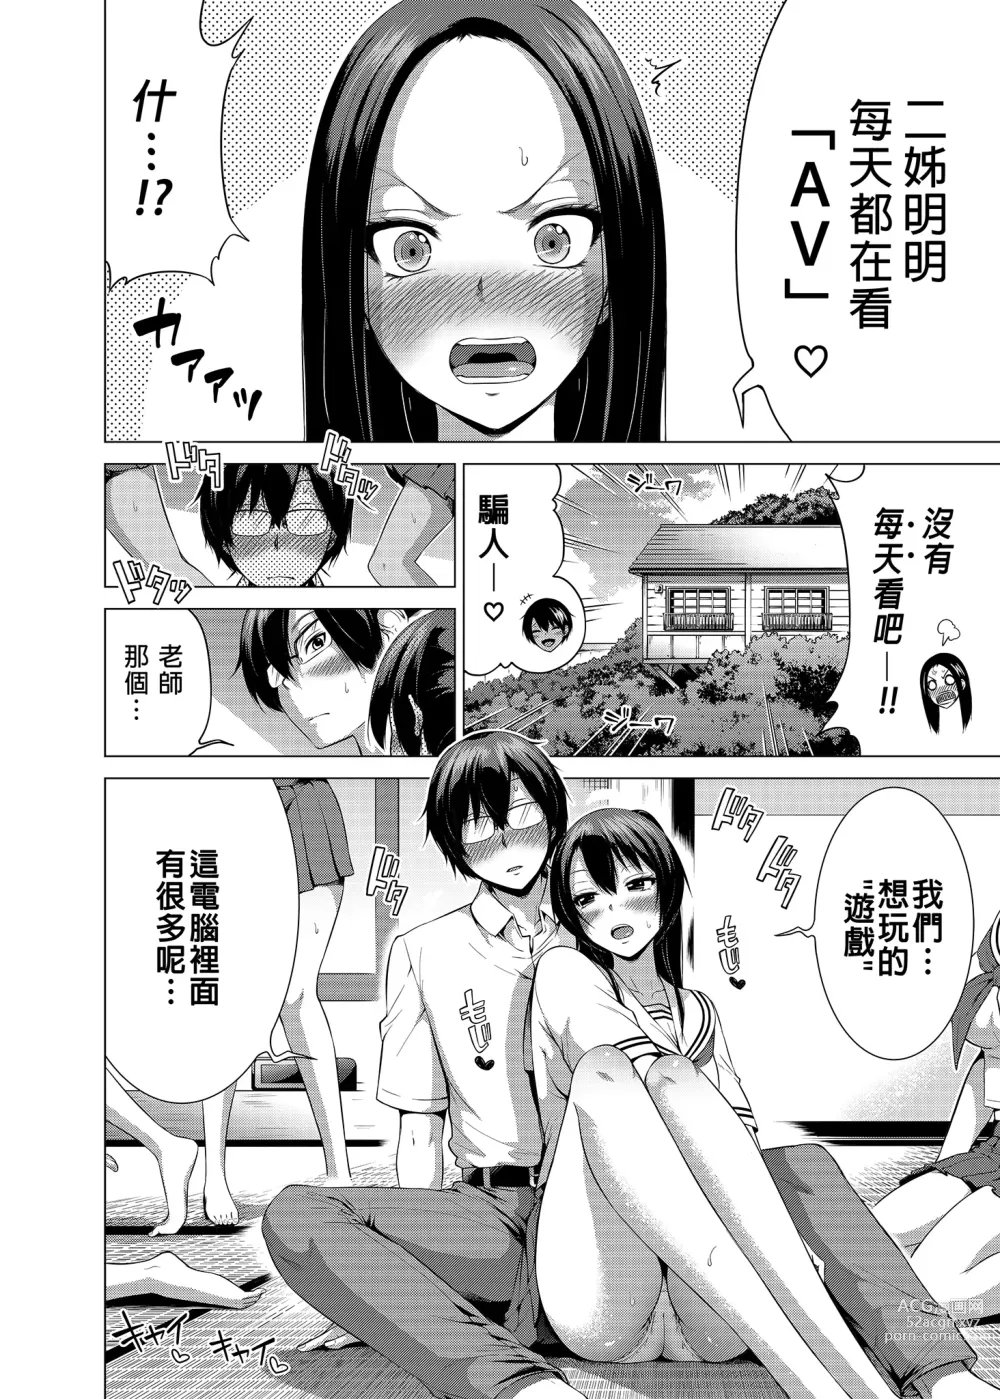 Page 5 of manga 七夏5